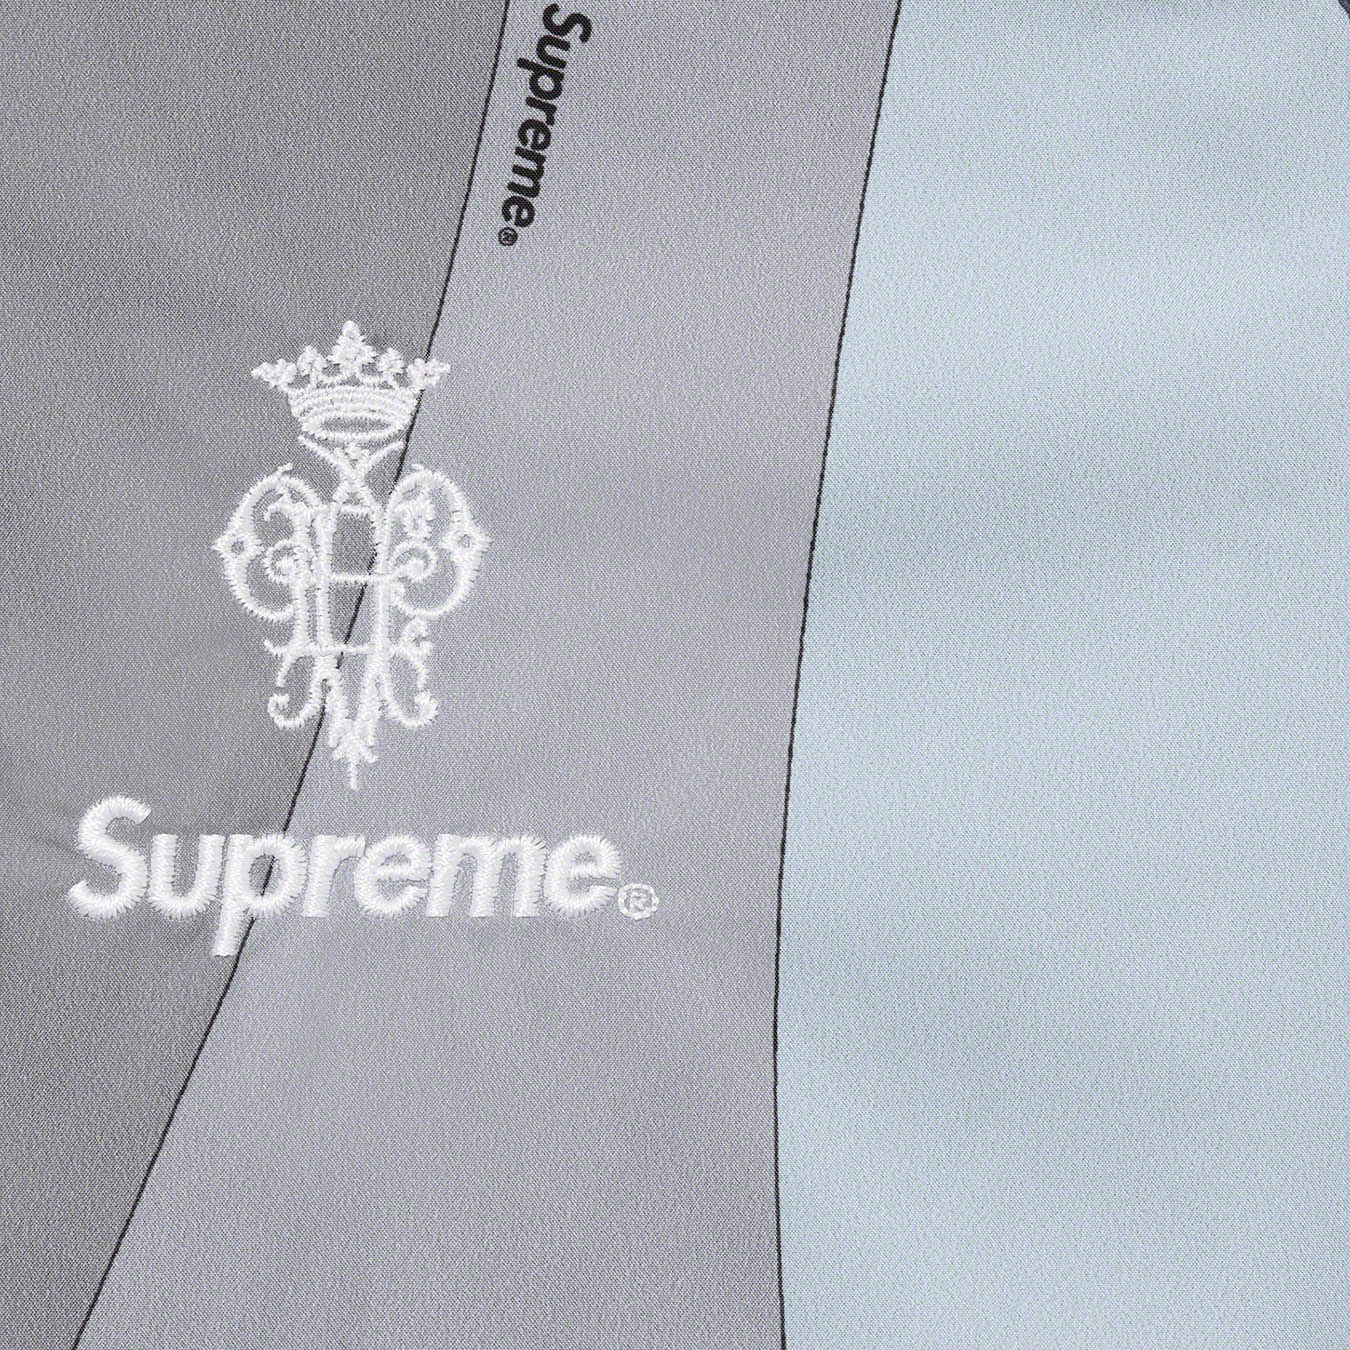 Supreme®/Emilio Pucci® Sport Jacket